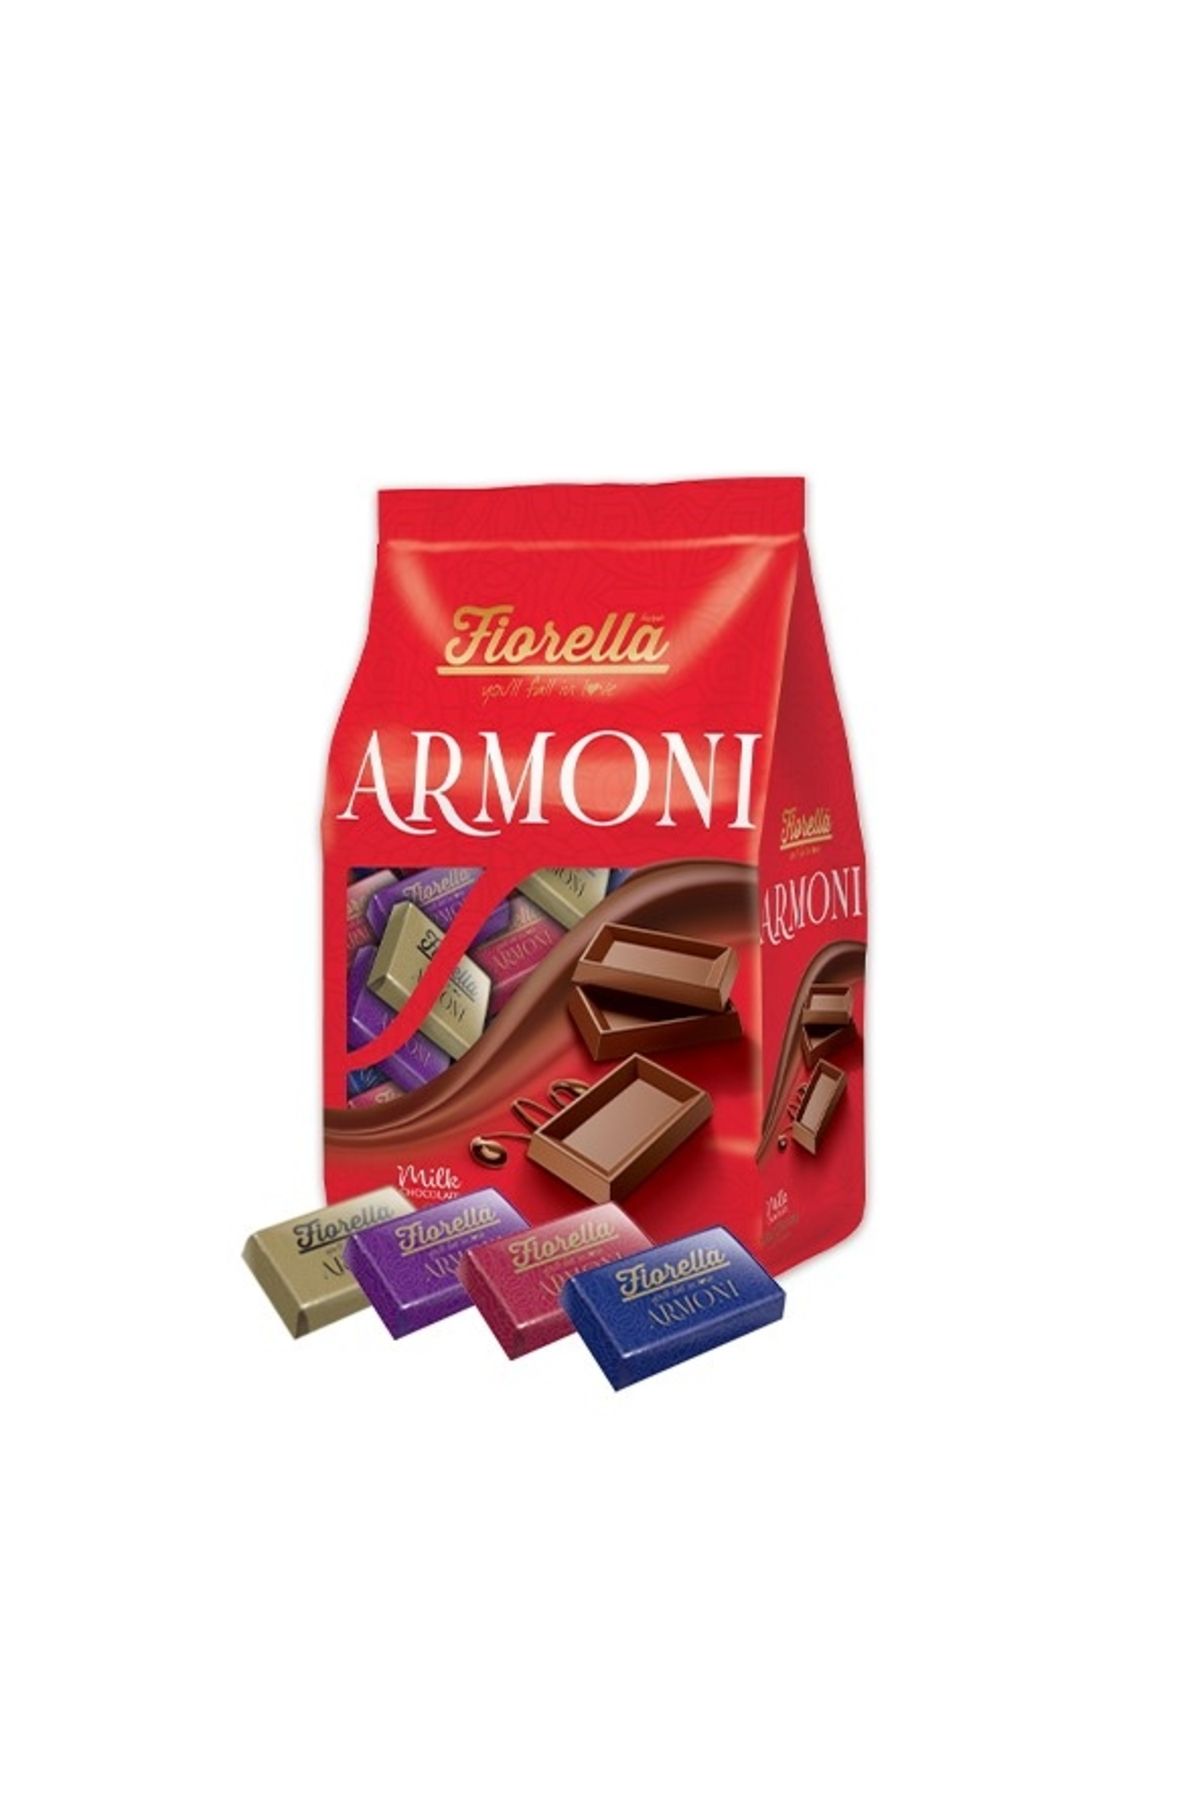 FIORELLA Armoni Sütlü Çikolata 250 Gr. (1 POŞET)